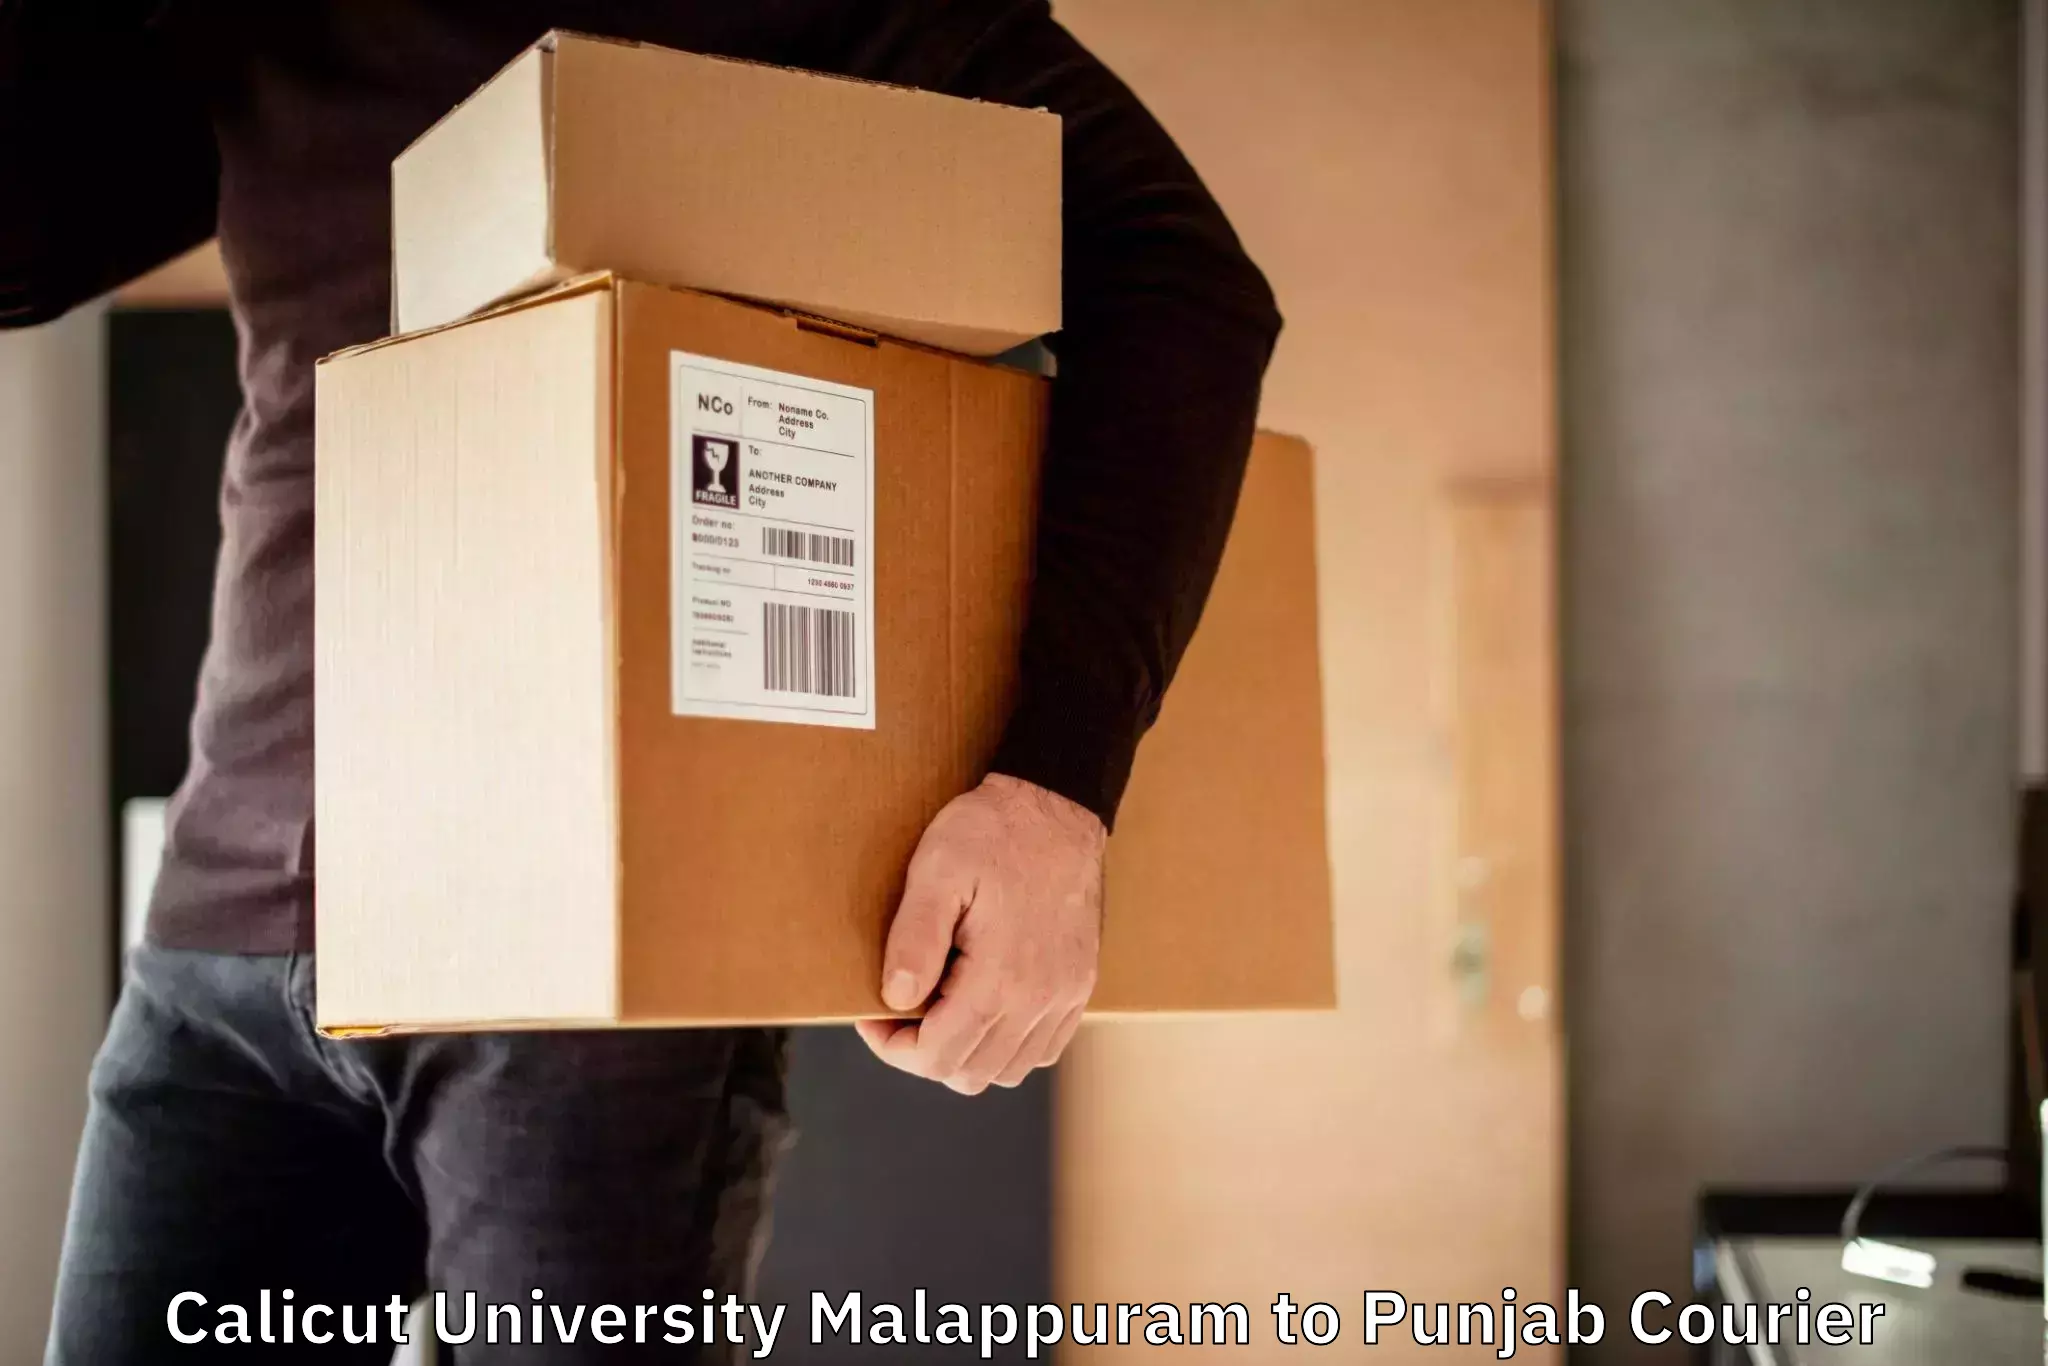 Bulk courier orders Calicut University Malappuram to Pathankot